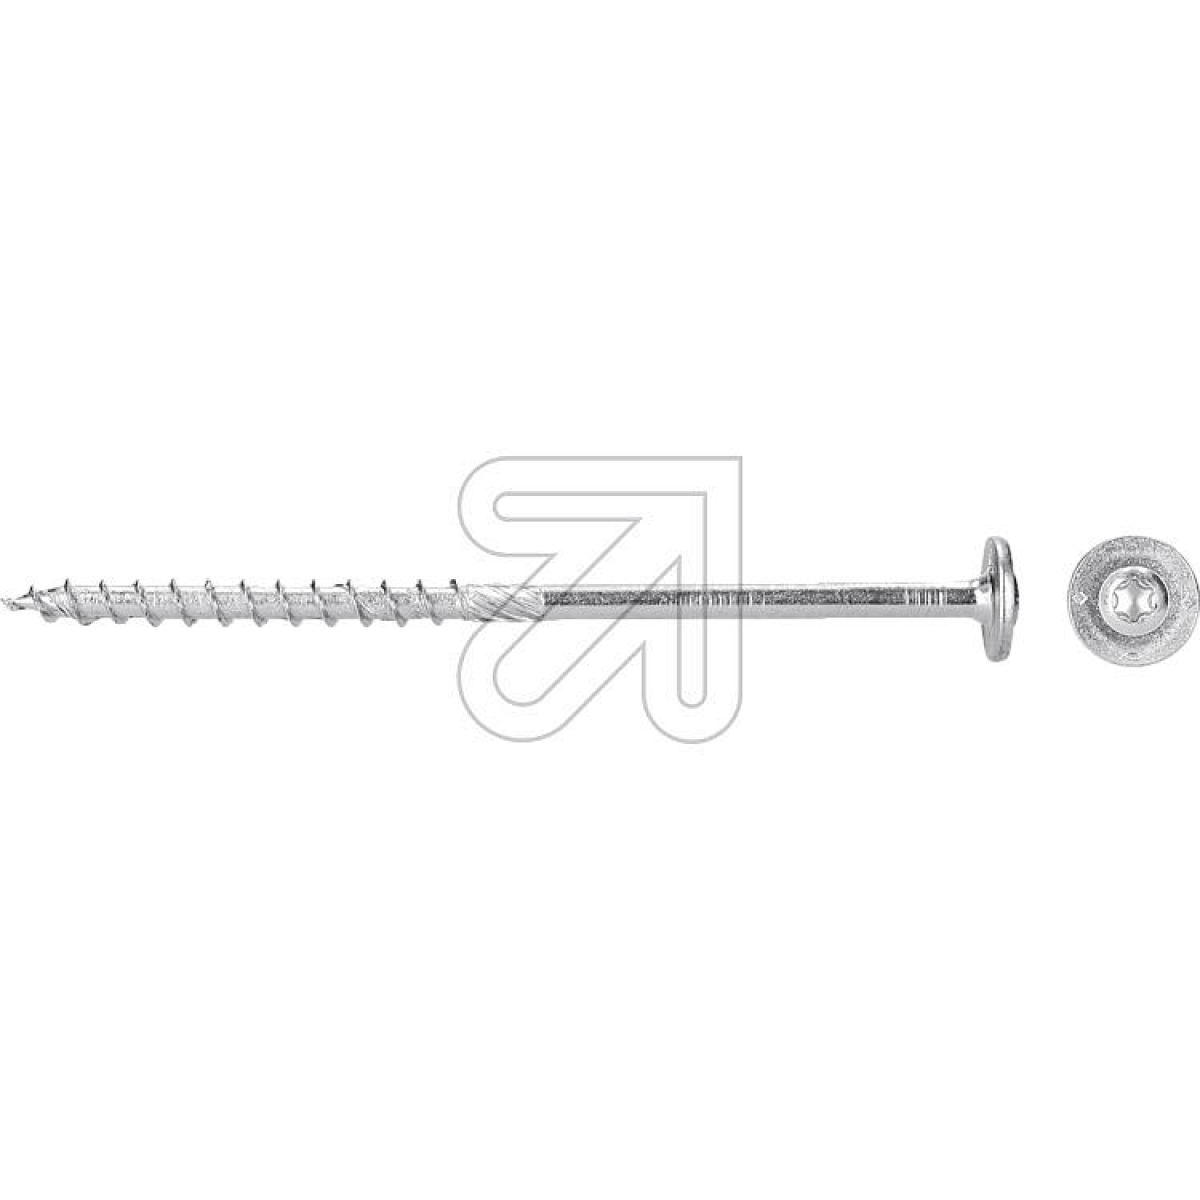 FischerPowerFast flat head screw 8.0x160 TK TX40 TG 545257-Price for 50 pcs.Article-No: 196365